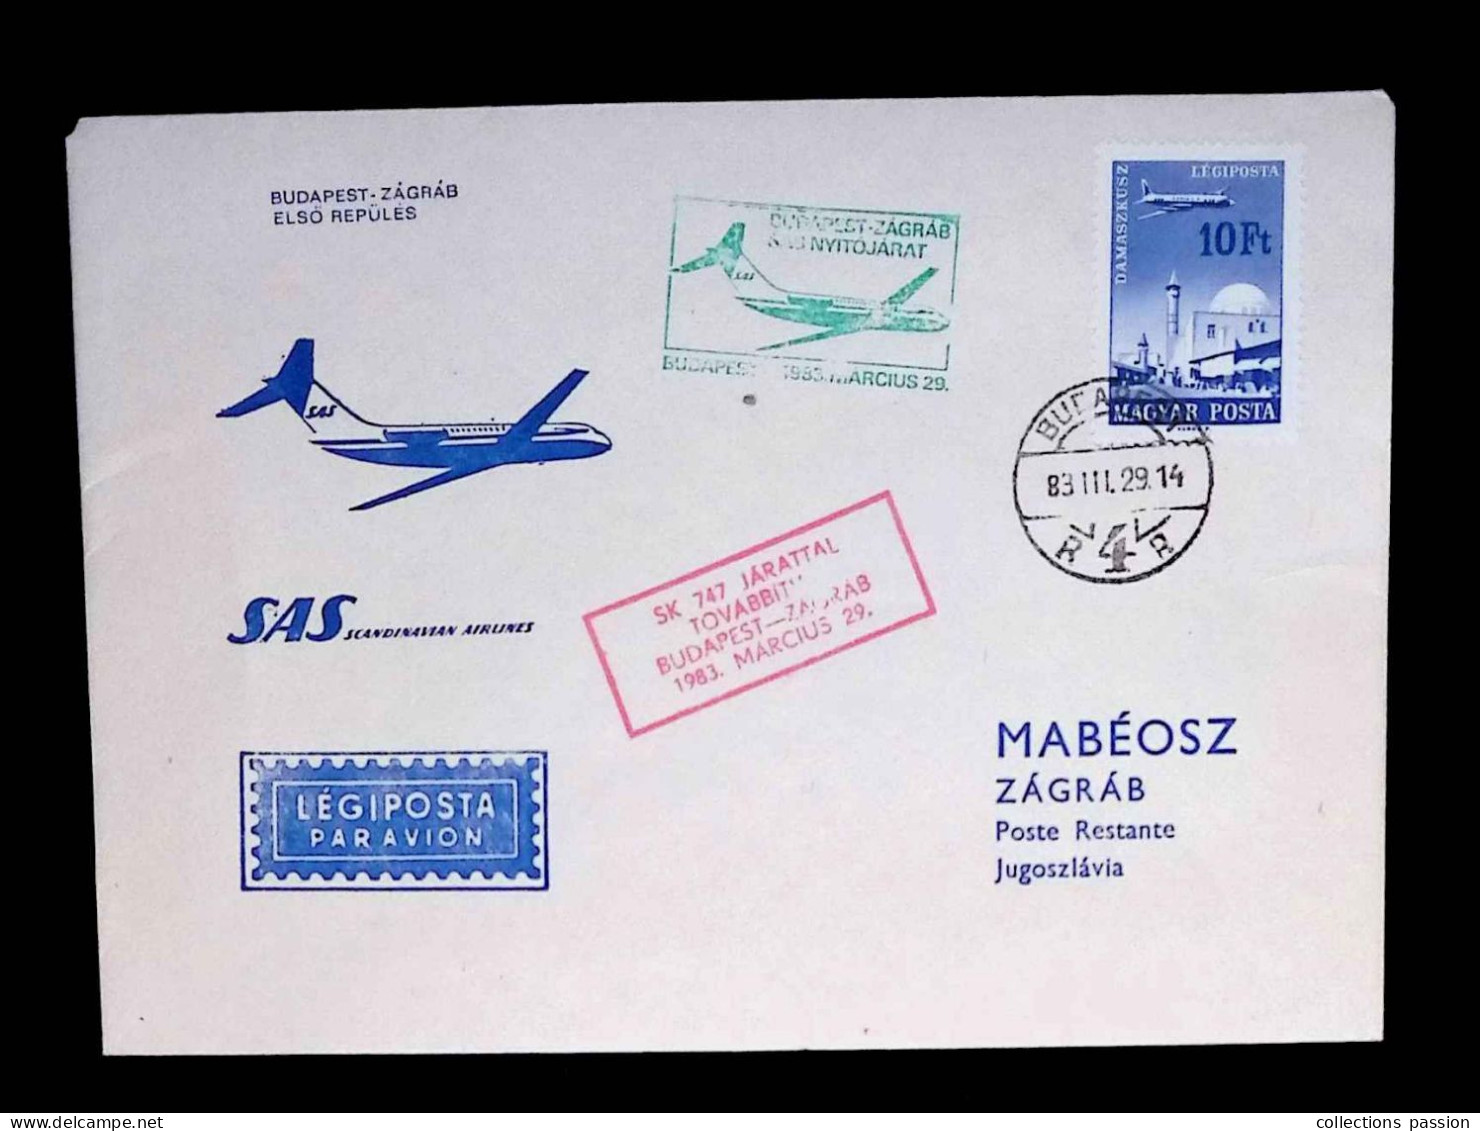 CL, Lettre, Hongrie, Budapest, R 4 R, 1983, SAS Scandinave Airlines, Zagreb, 2 Scans - Marcofilie